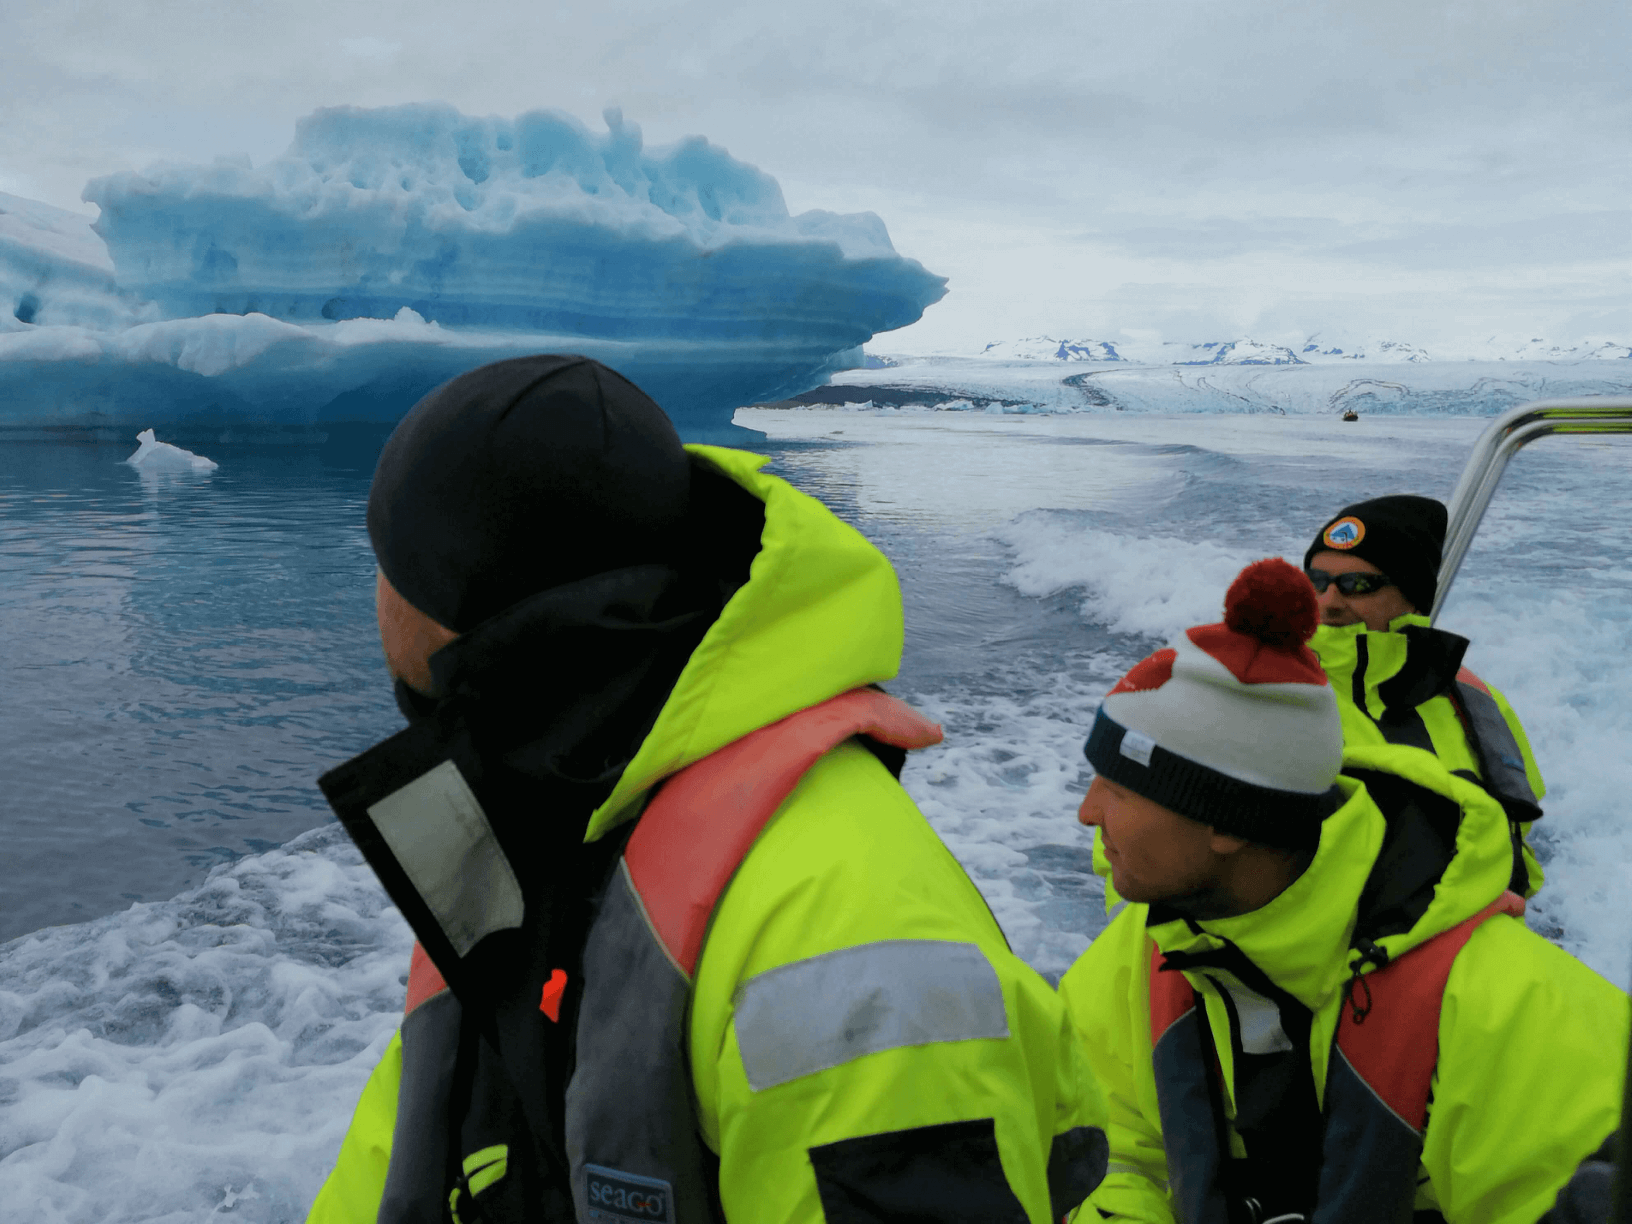 Zodiac tour on Jökulsárlón glacier lagoon in Iceland